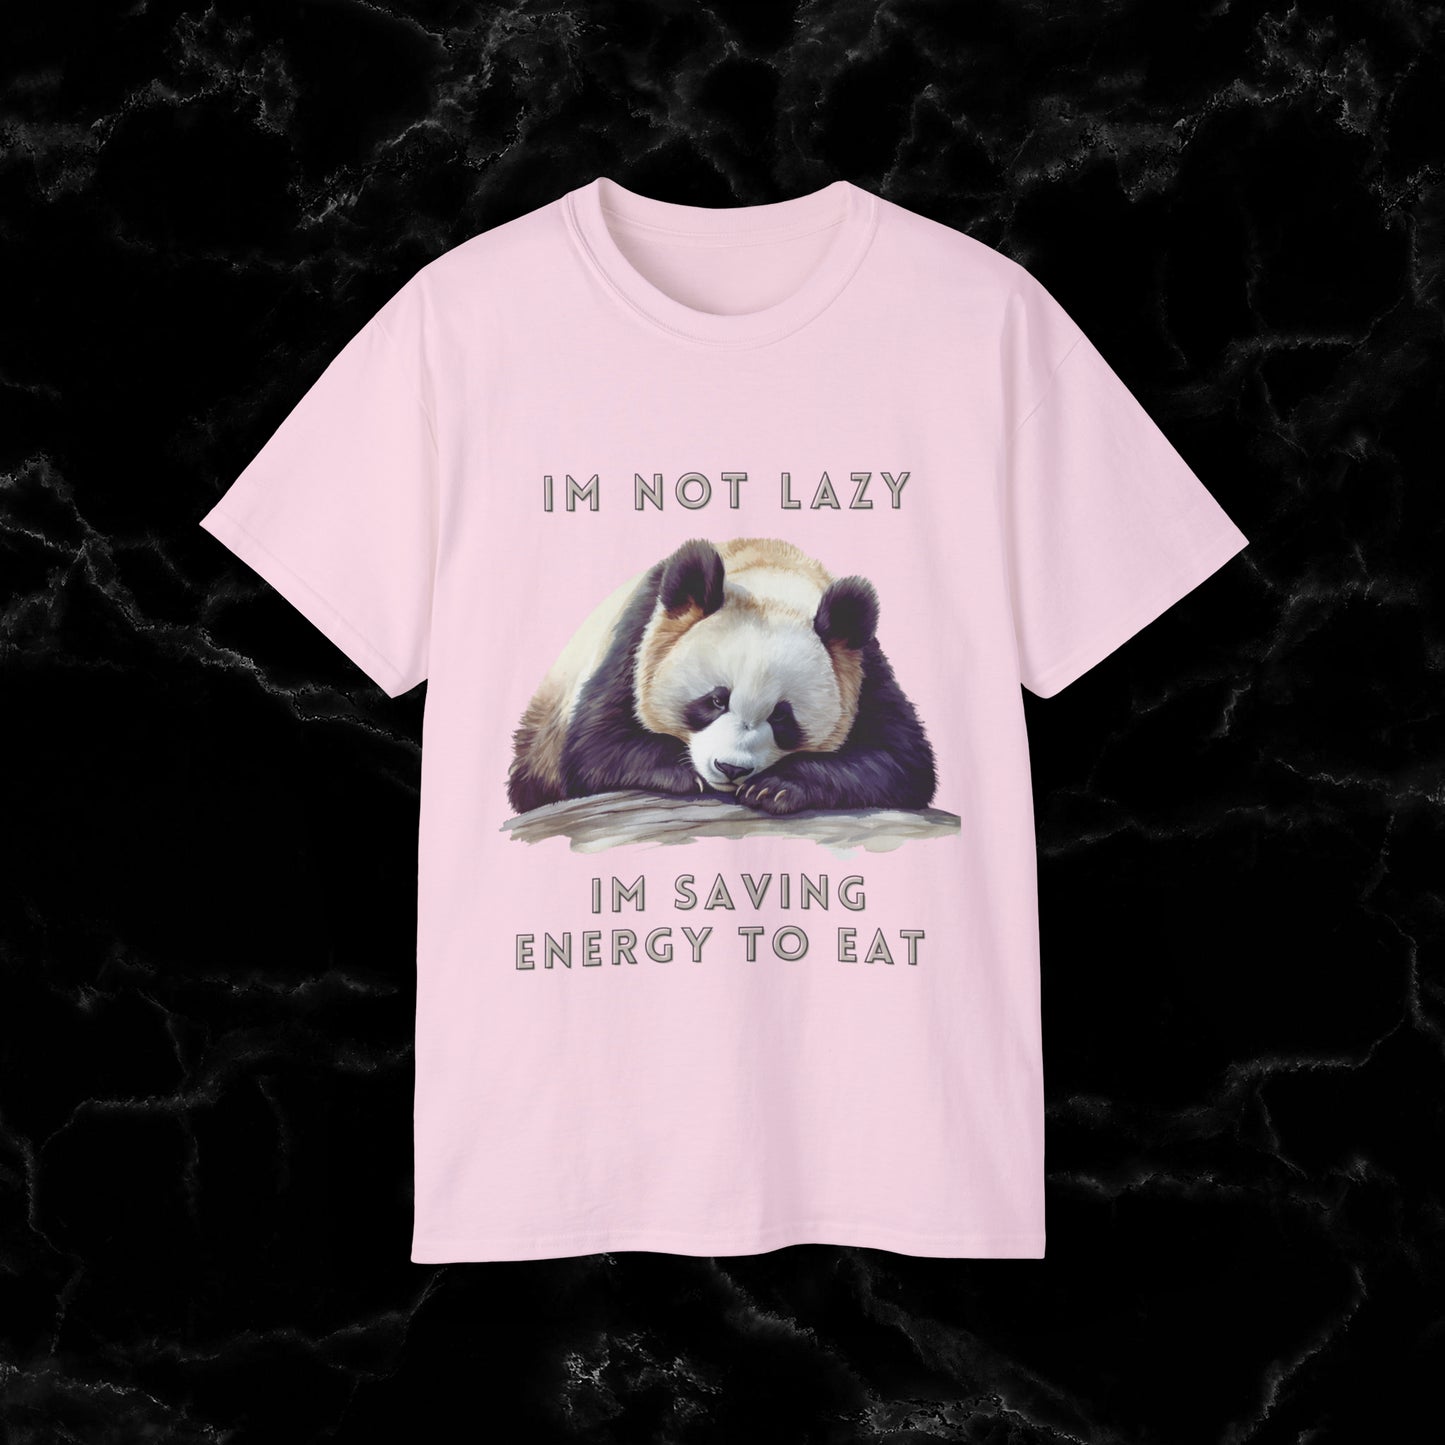 Nap Time Panda Unisex Funny Tee - Hilarious Panda Nap Design - I'm Not Lazy, I'm Saving Energy to Eat T-Shirt Light Pink S 